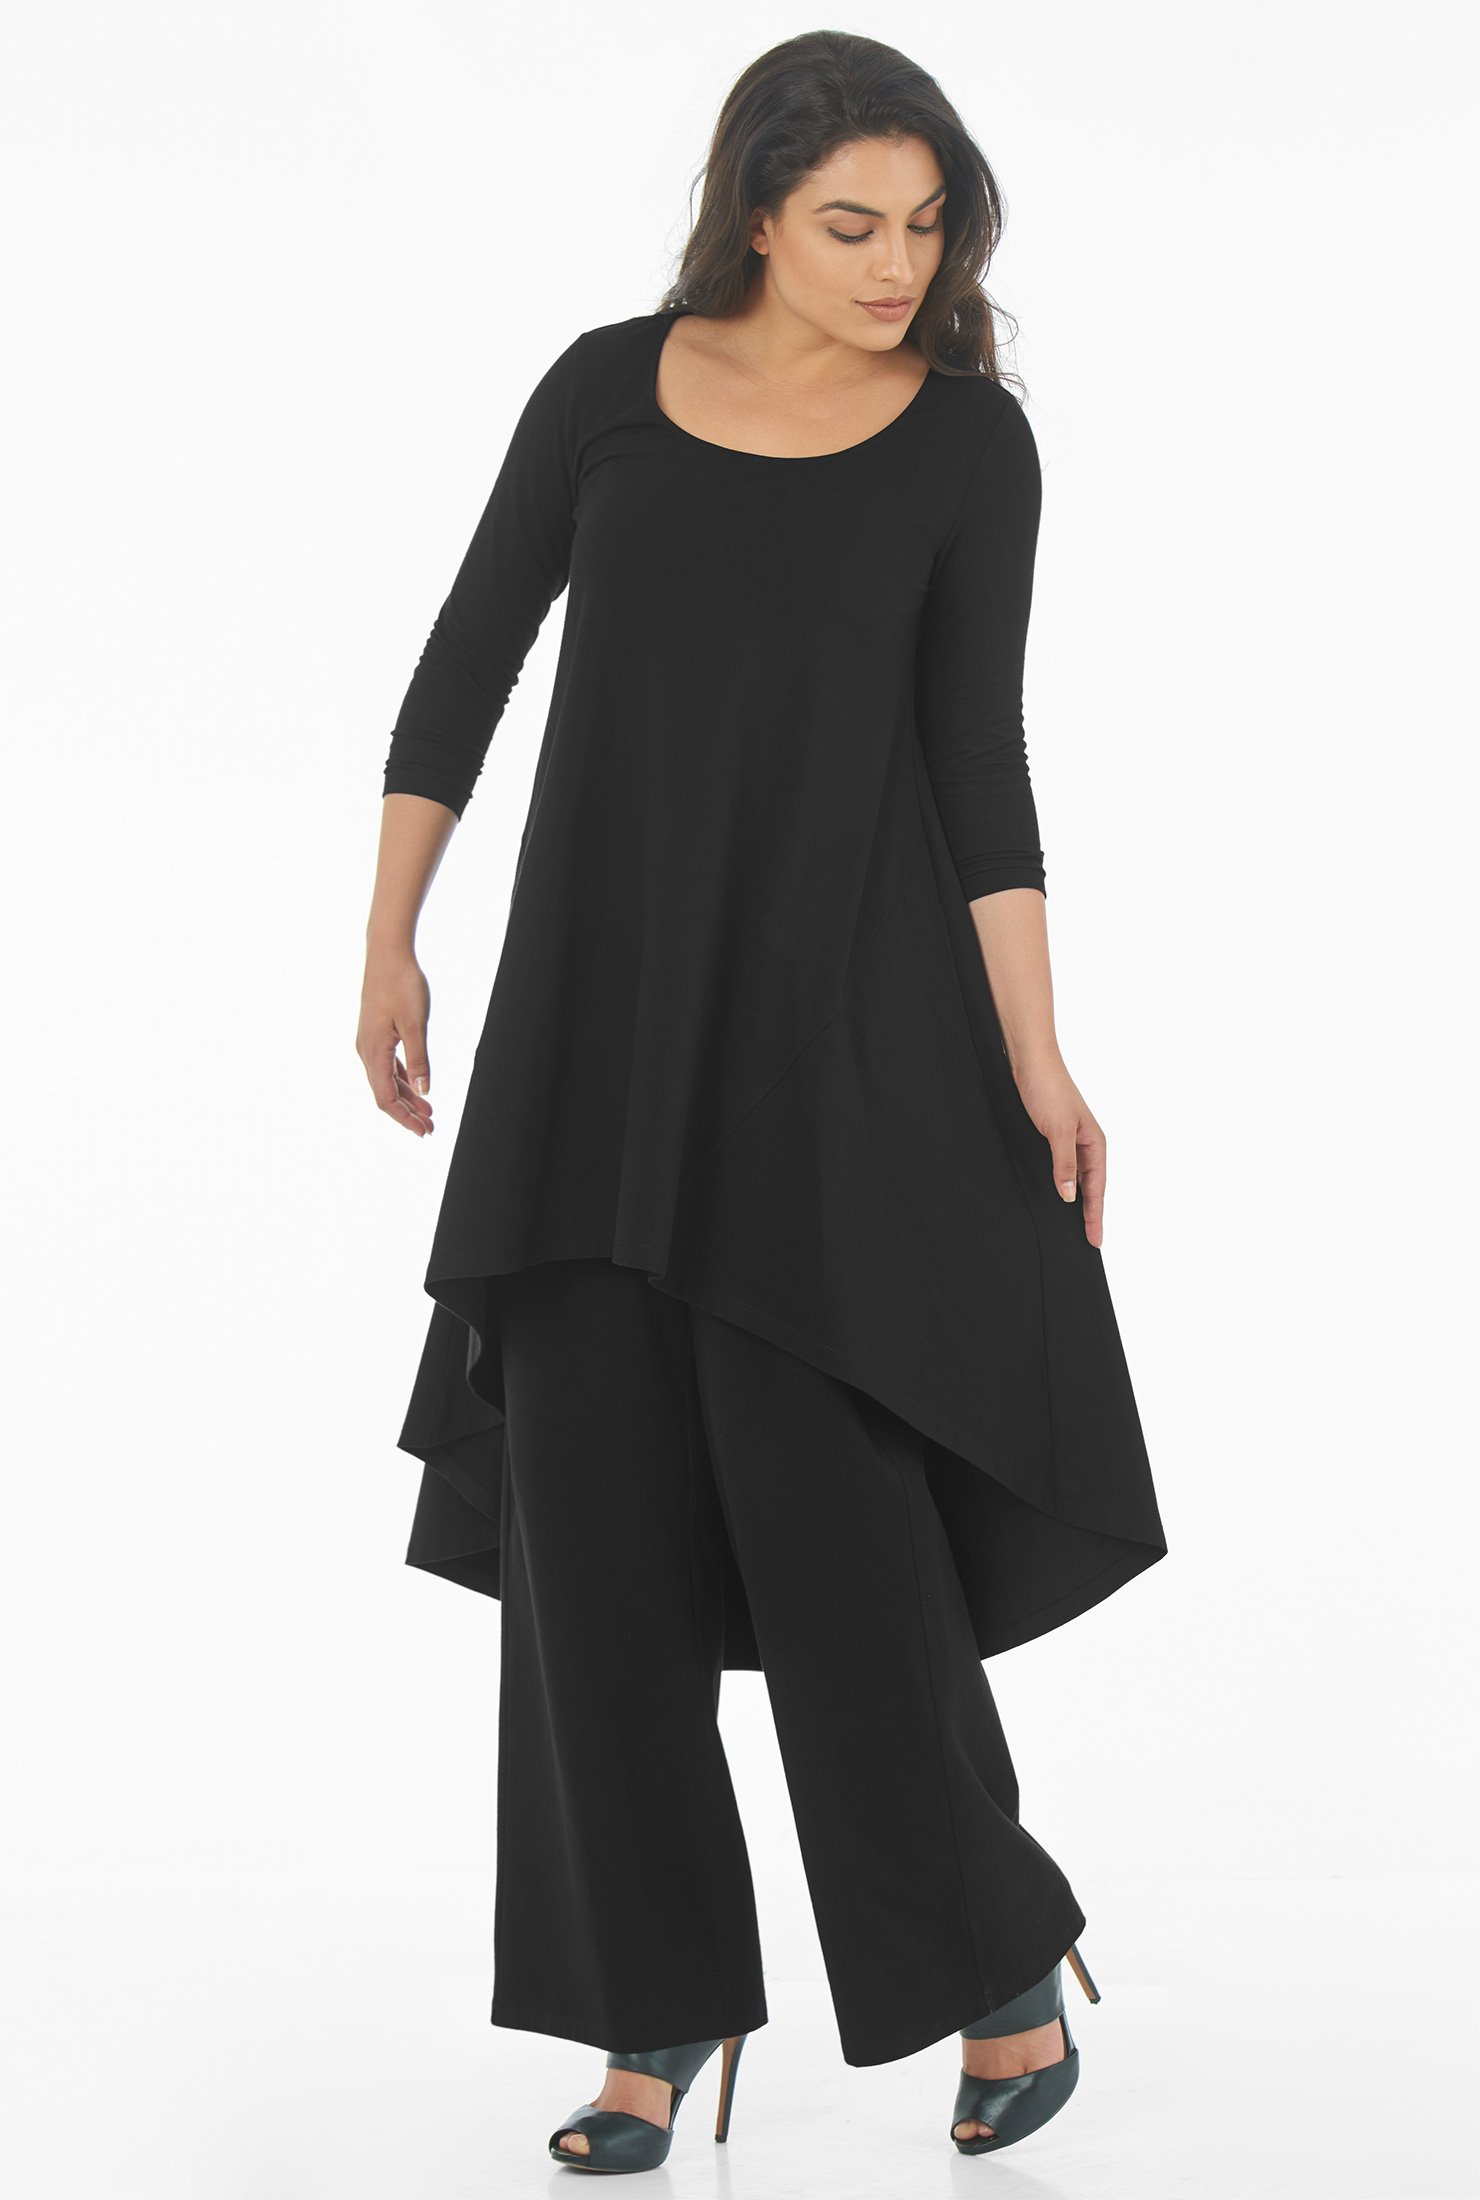 Shop High-low hem cotton knit tunic dress and wide leg pants | eShakti